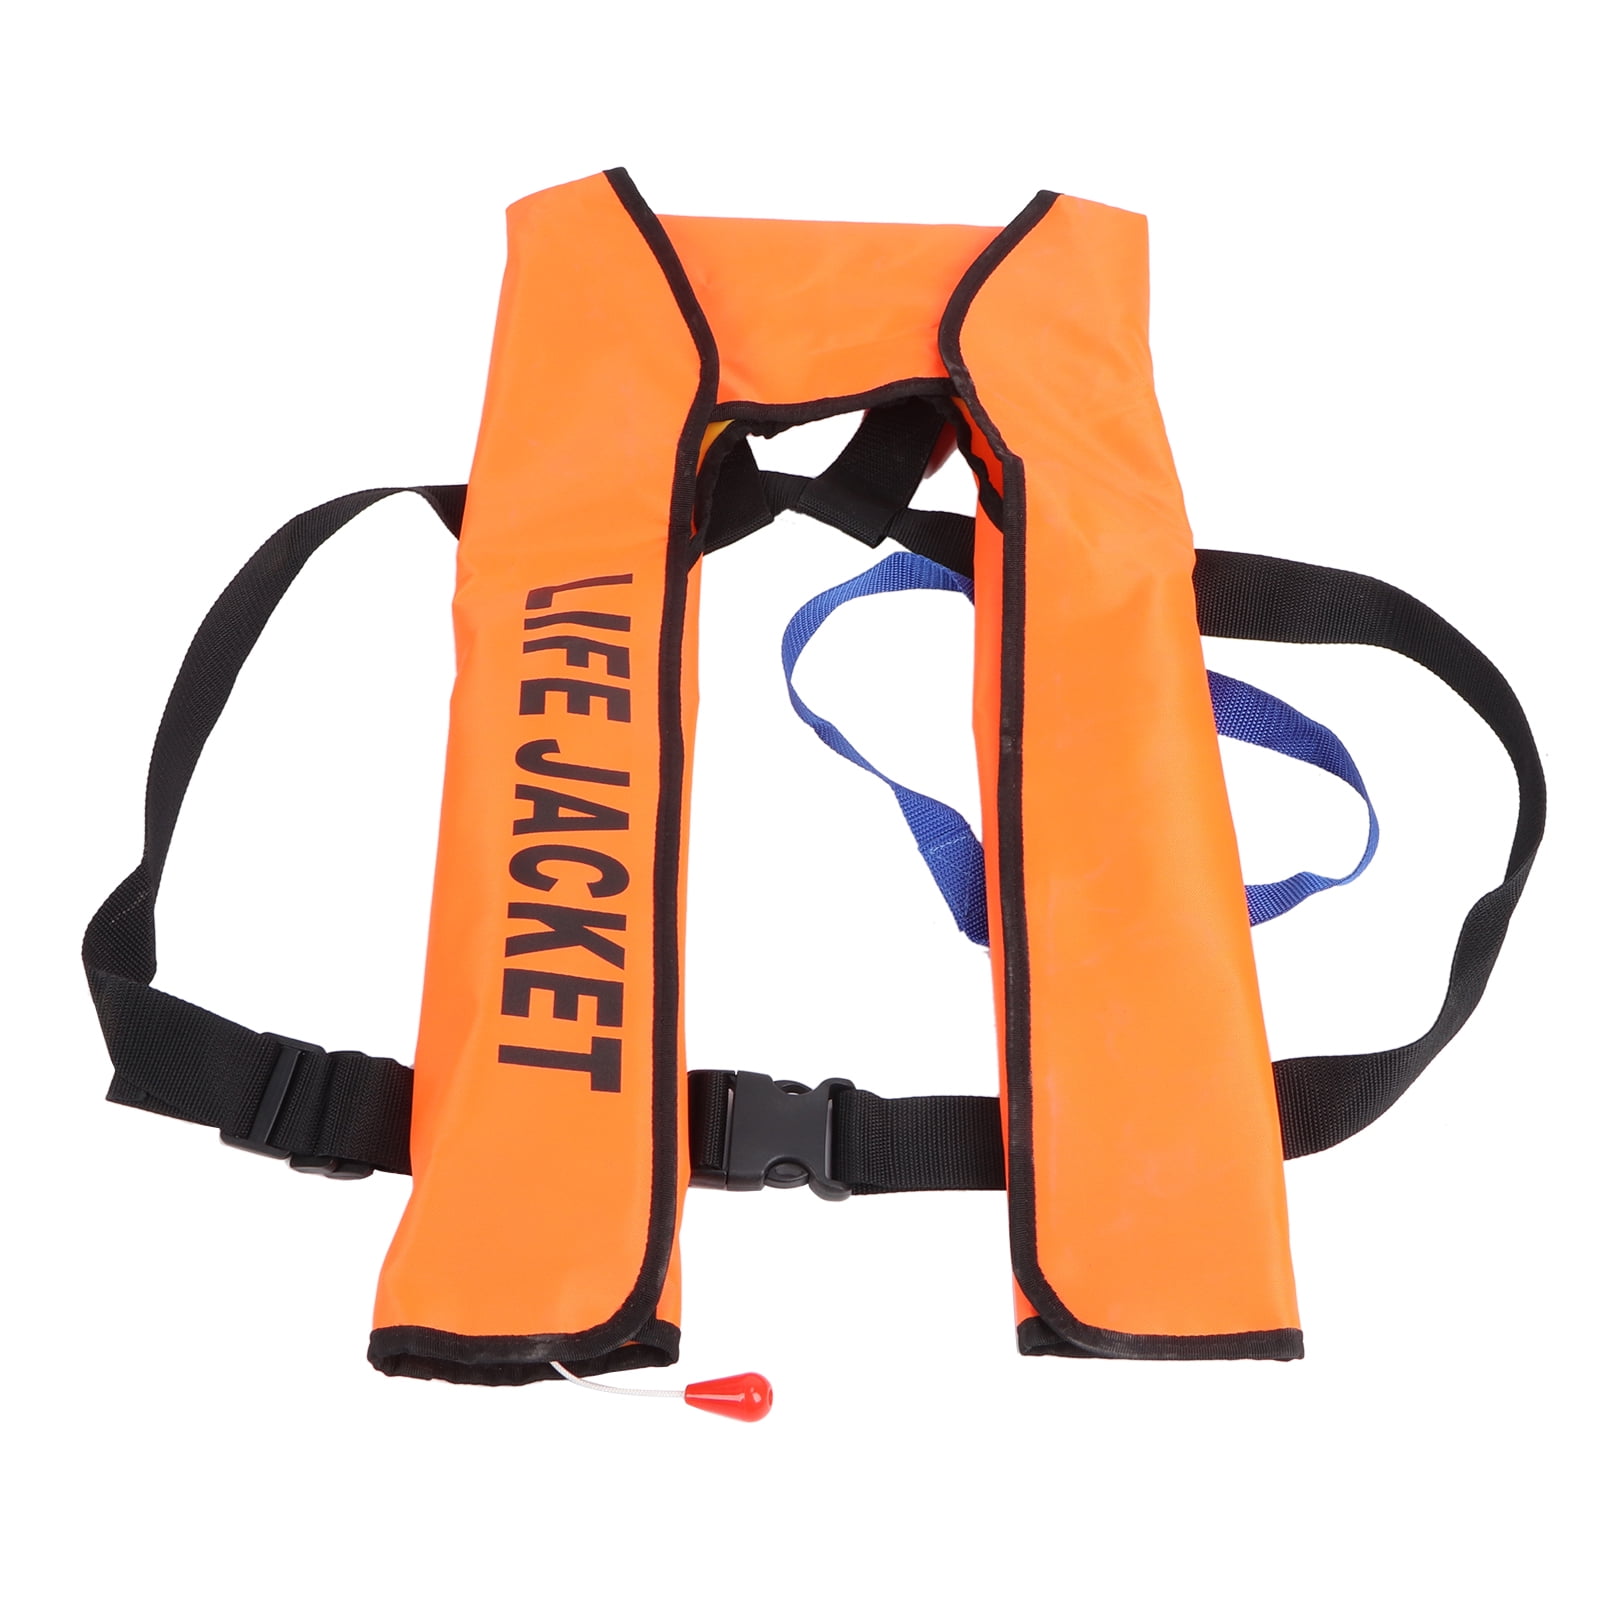 Details about   Life Jacket Adult Universal Boating Vest Manual Inflatable Survival Lightweight 